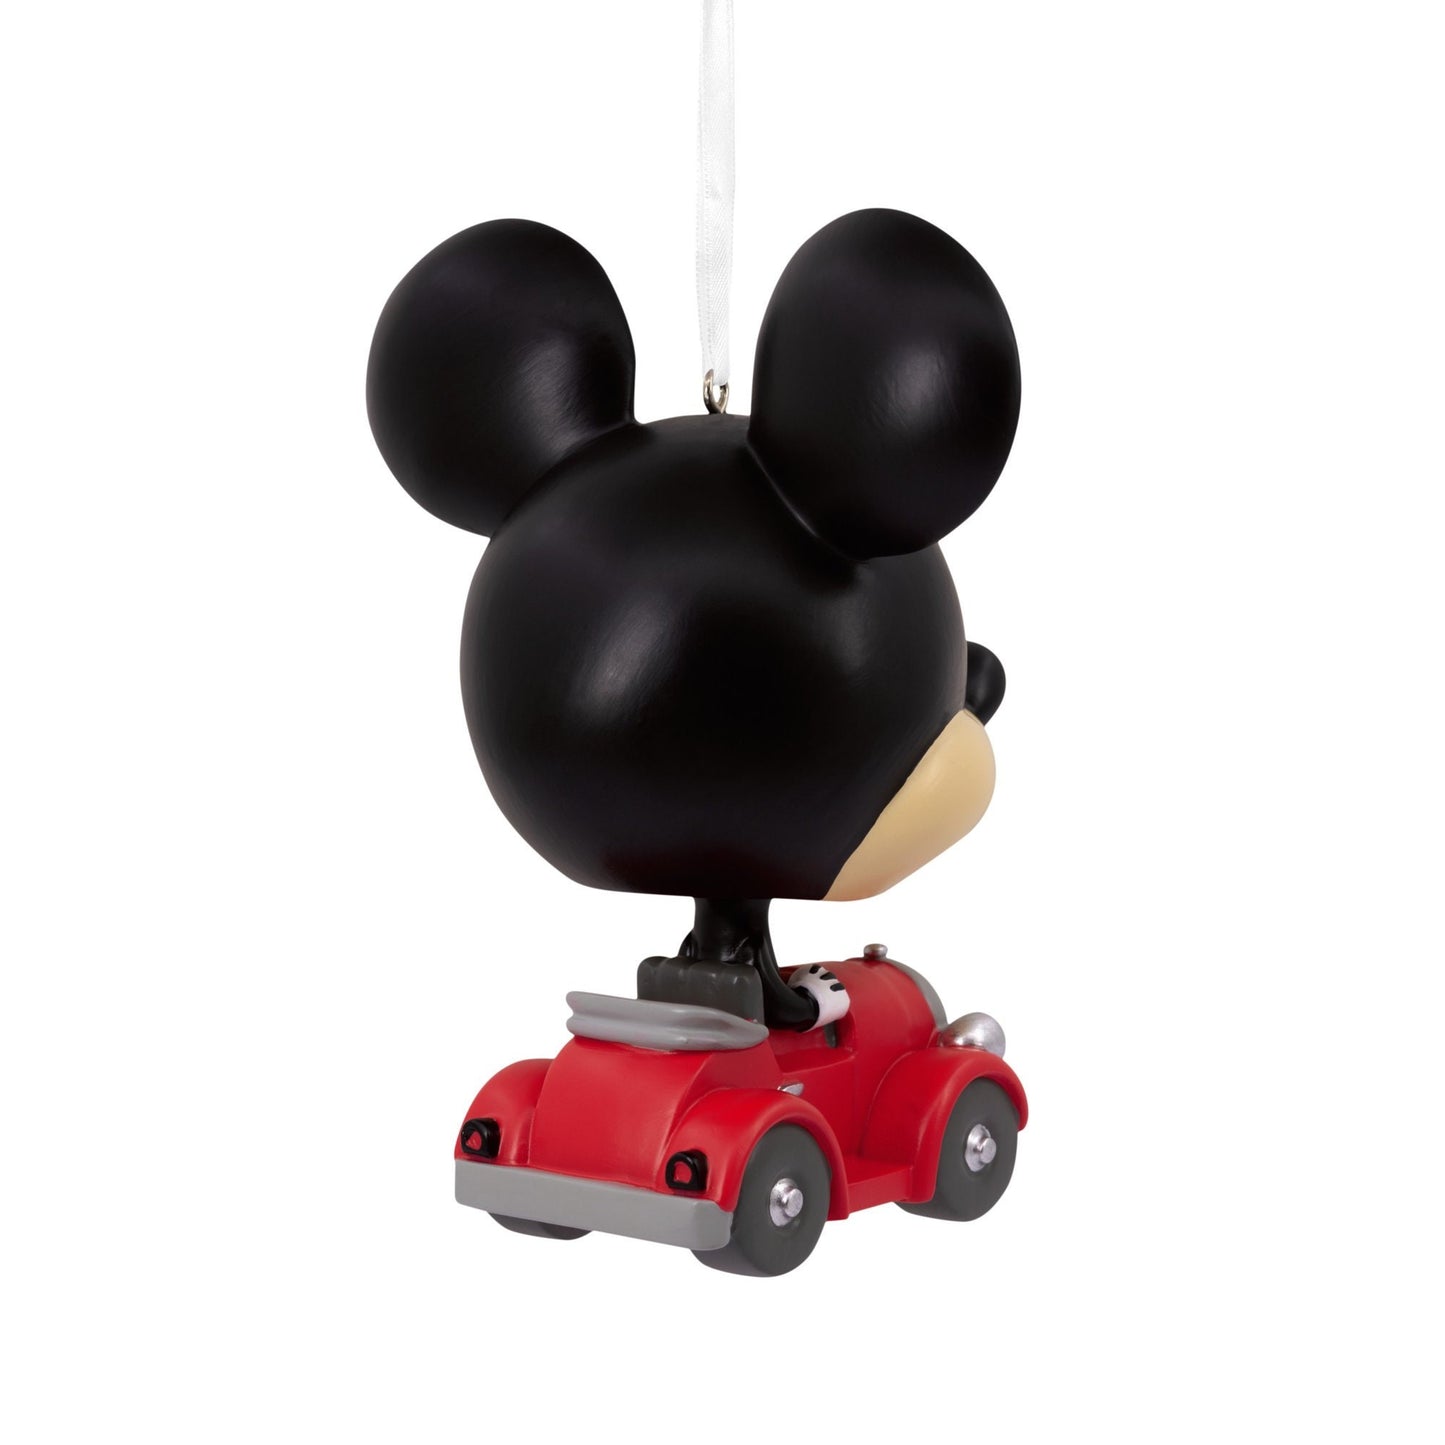 Hallmark Disney Mickey Mouse Bouncing Buddy Christmas Ornament - 2HCM9205